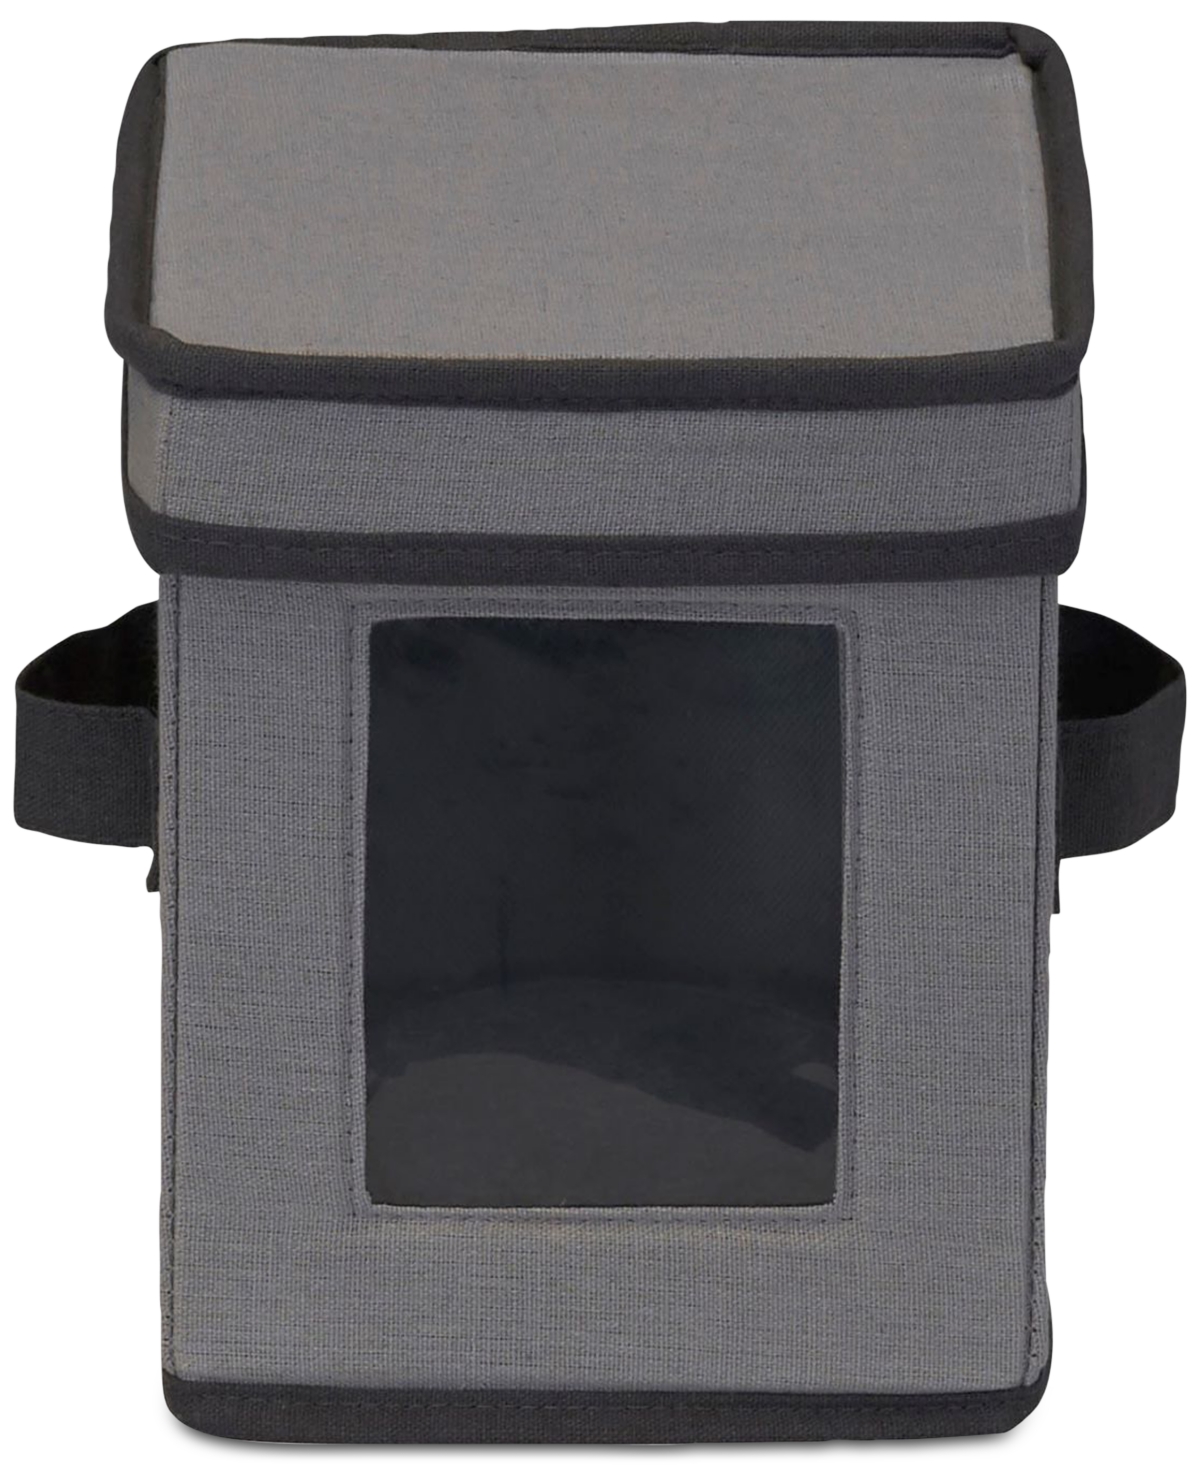 Household Essentials Saucer Storage Box In Gray